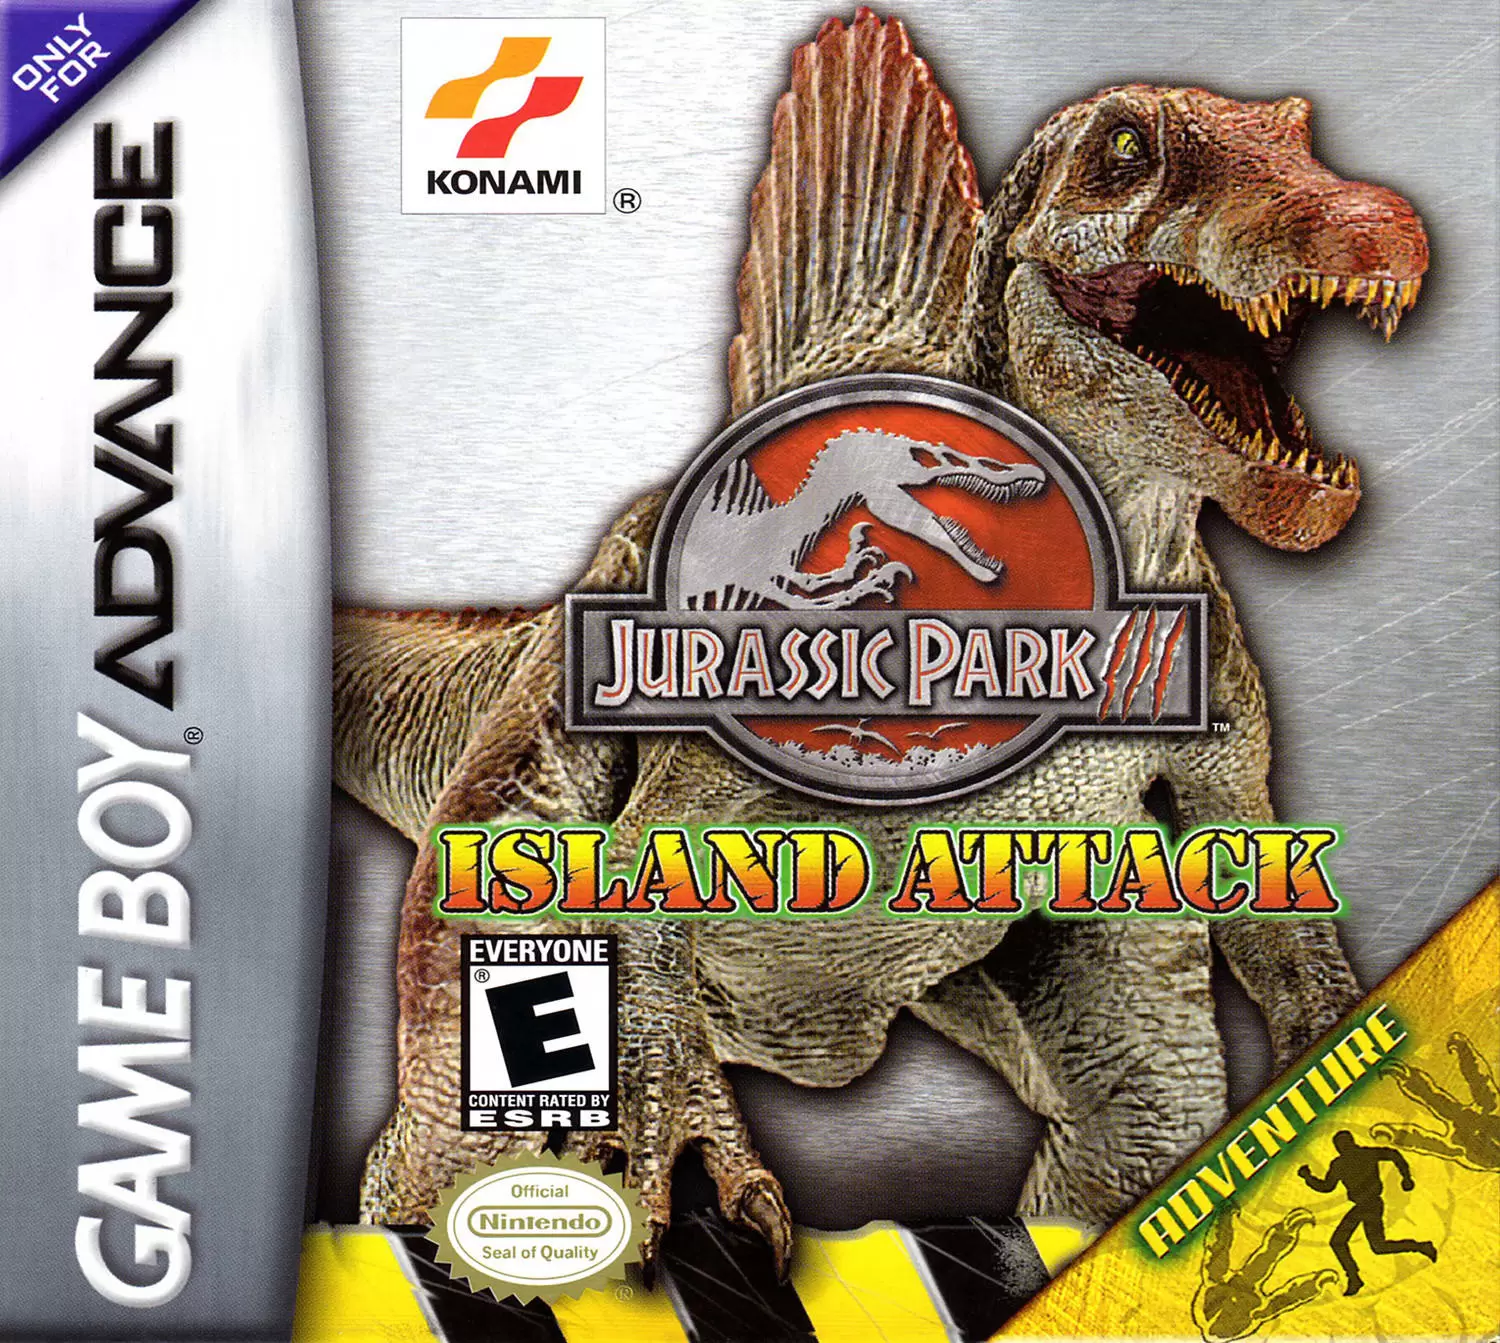 Game Boy Advance Games - Jurassic Park III: Island Attack